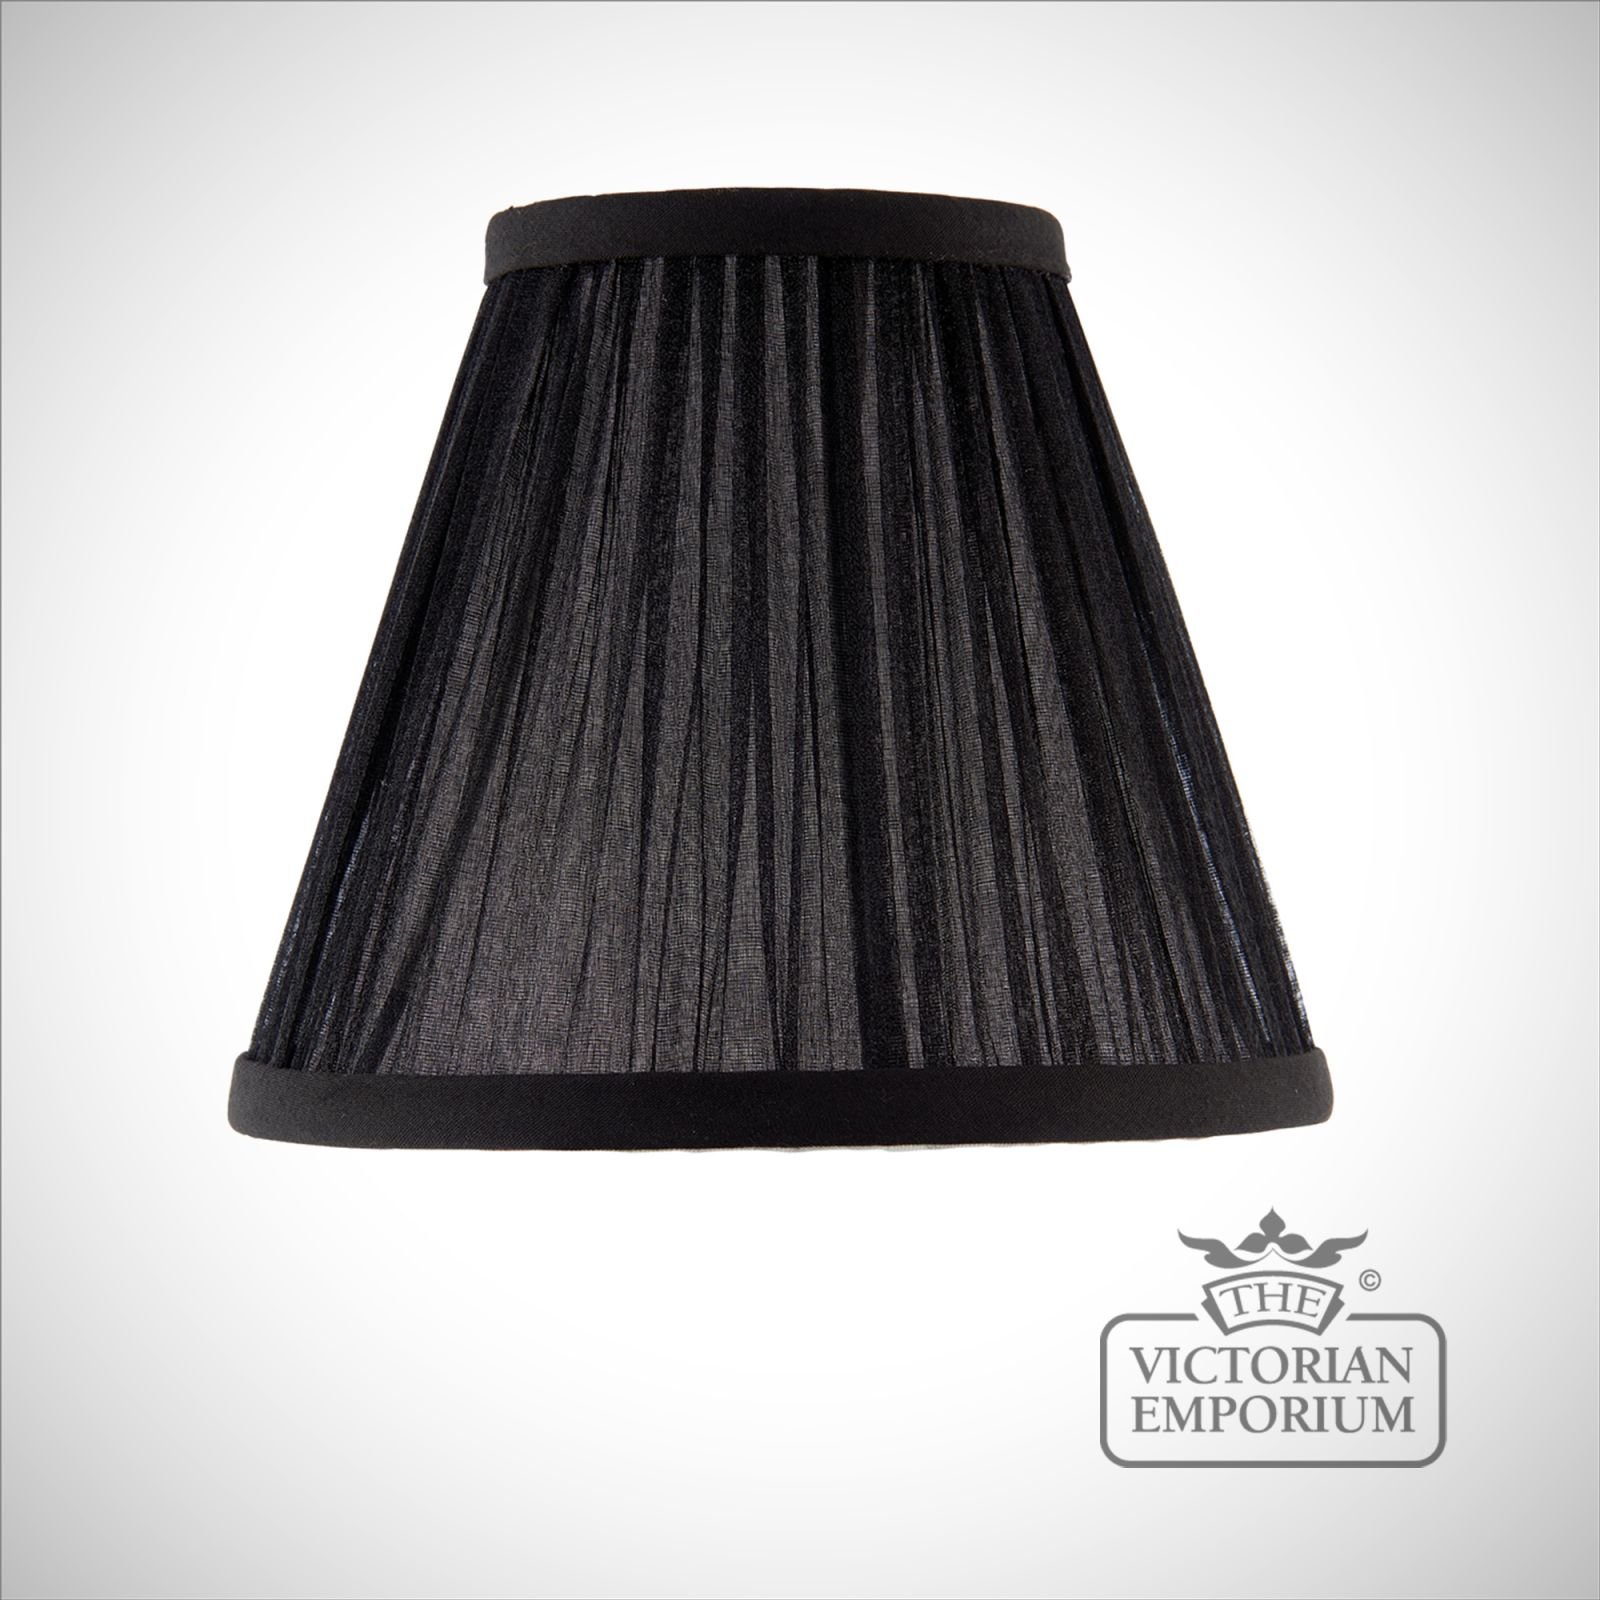 Kemp 6 inch lamp shade in Black or Beige